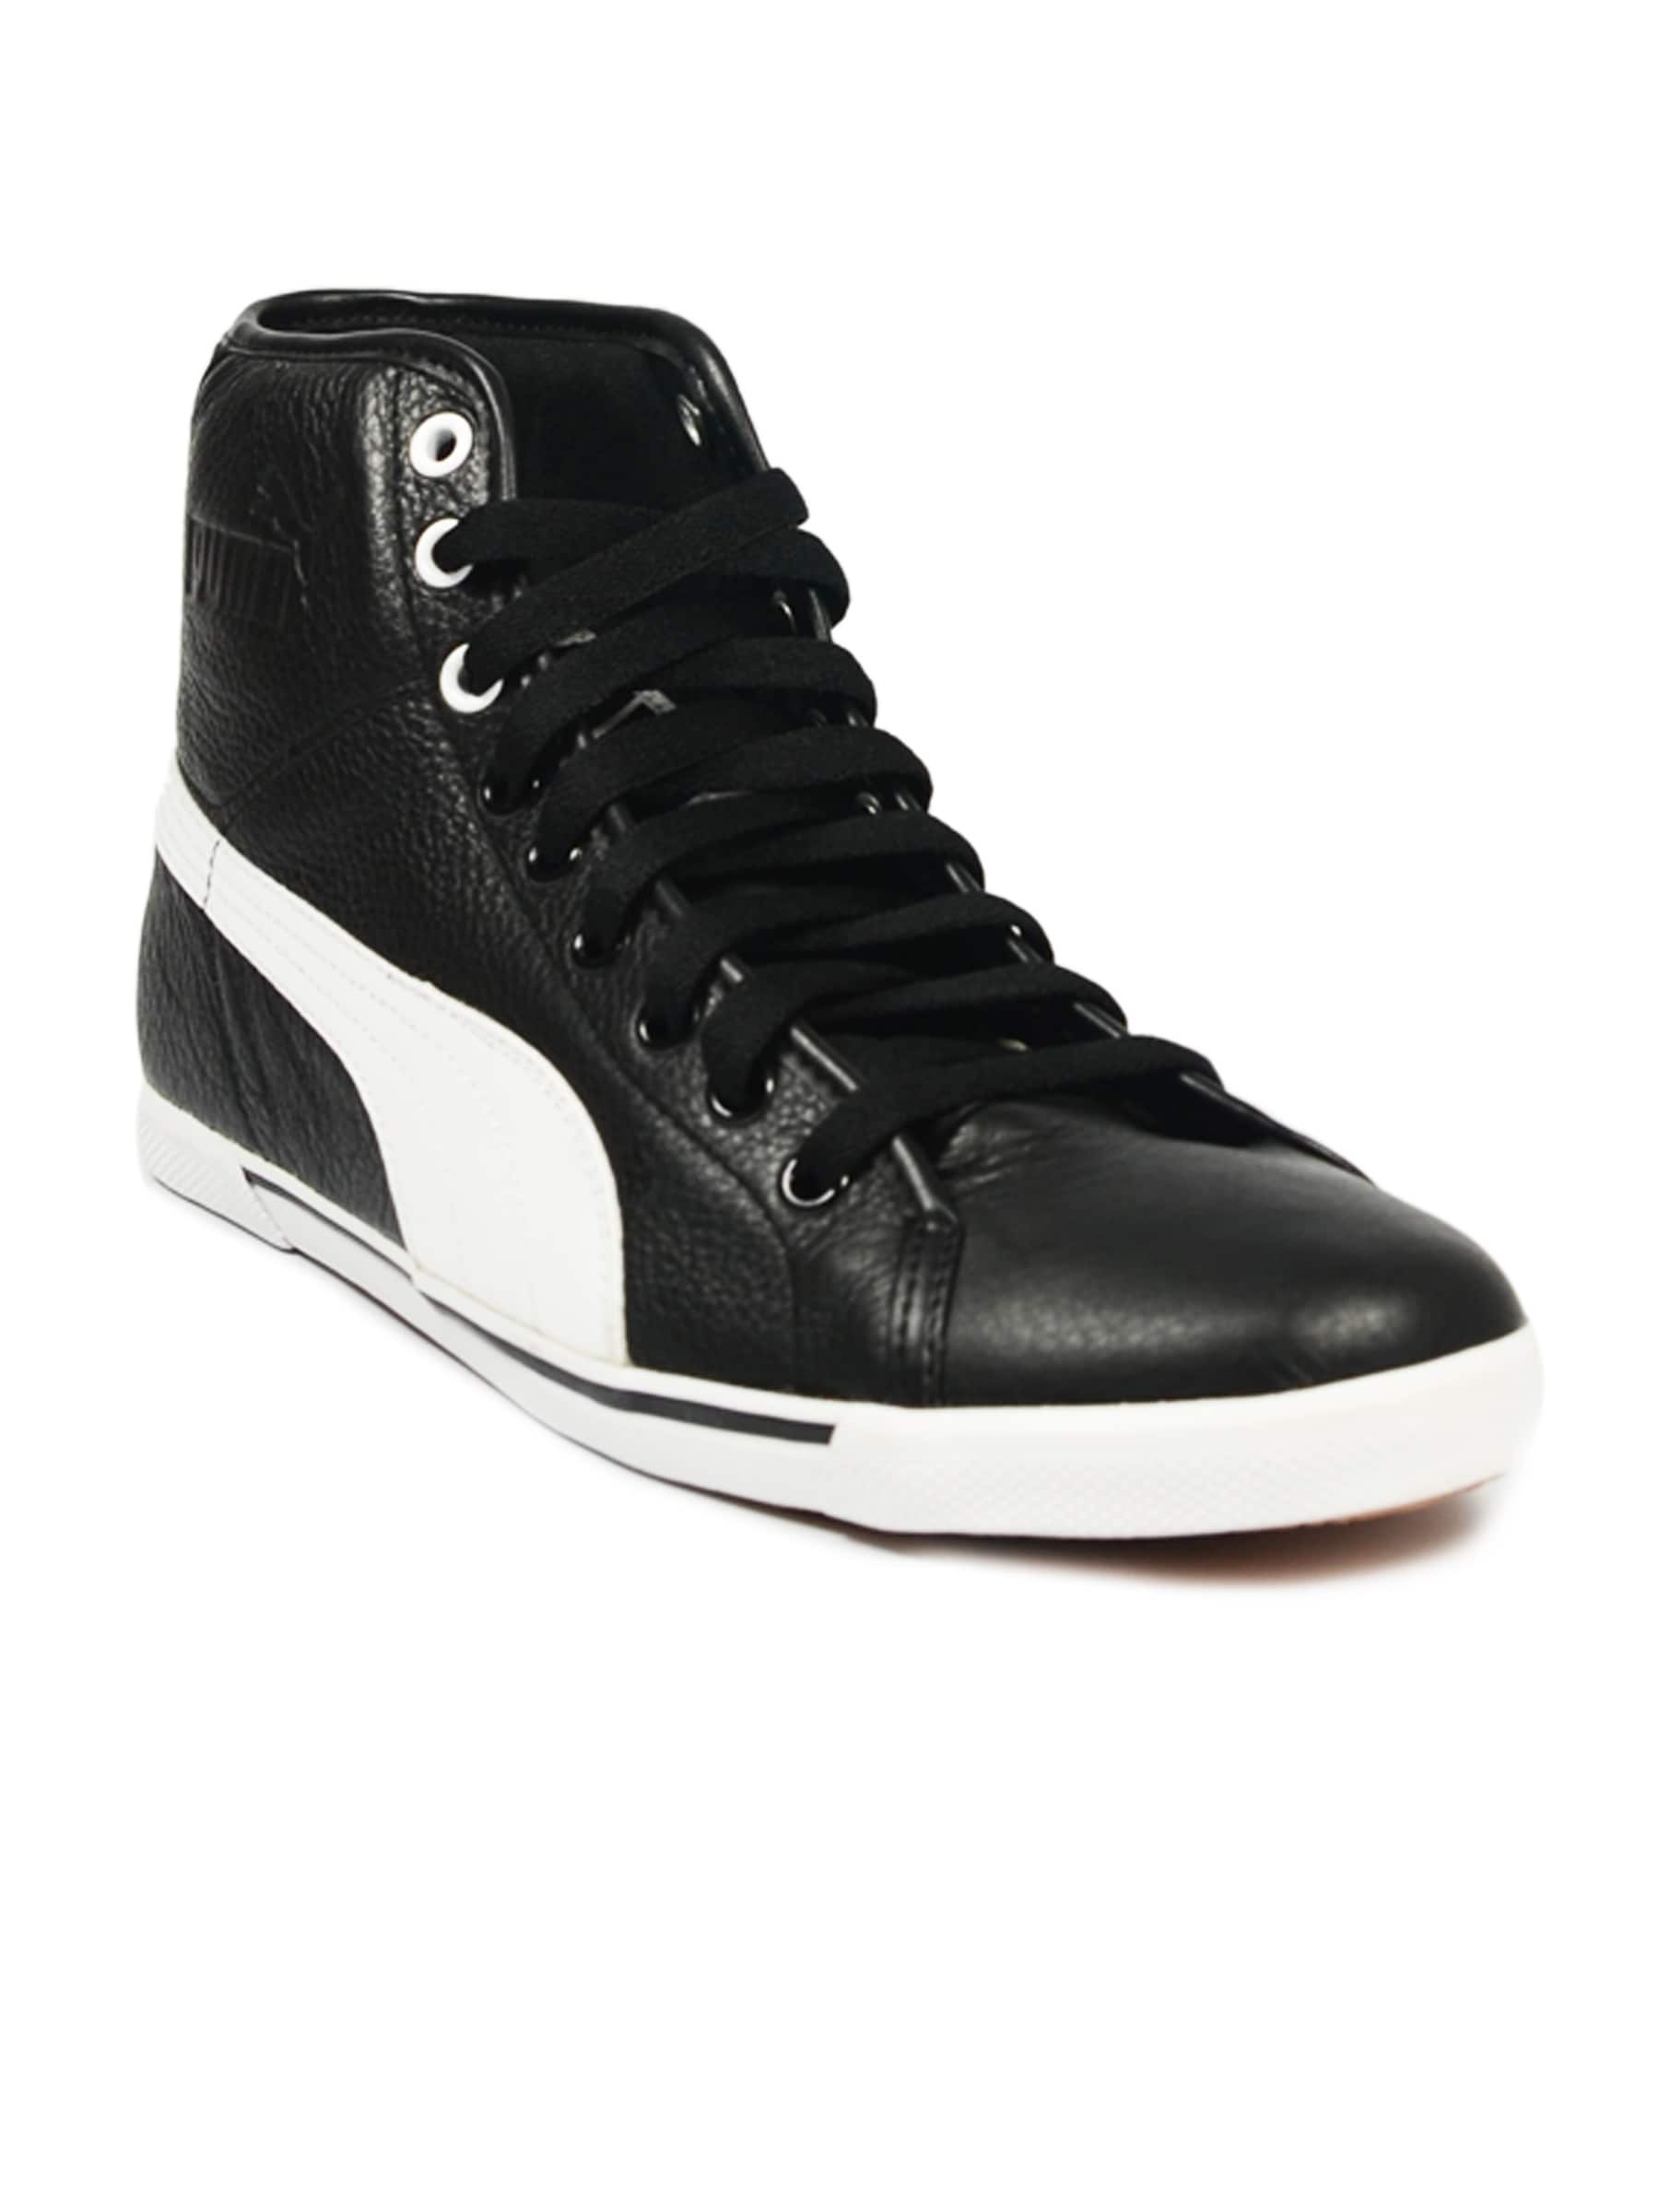 Puma Men's Benecio Mid Leather Black White Shoe